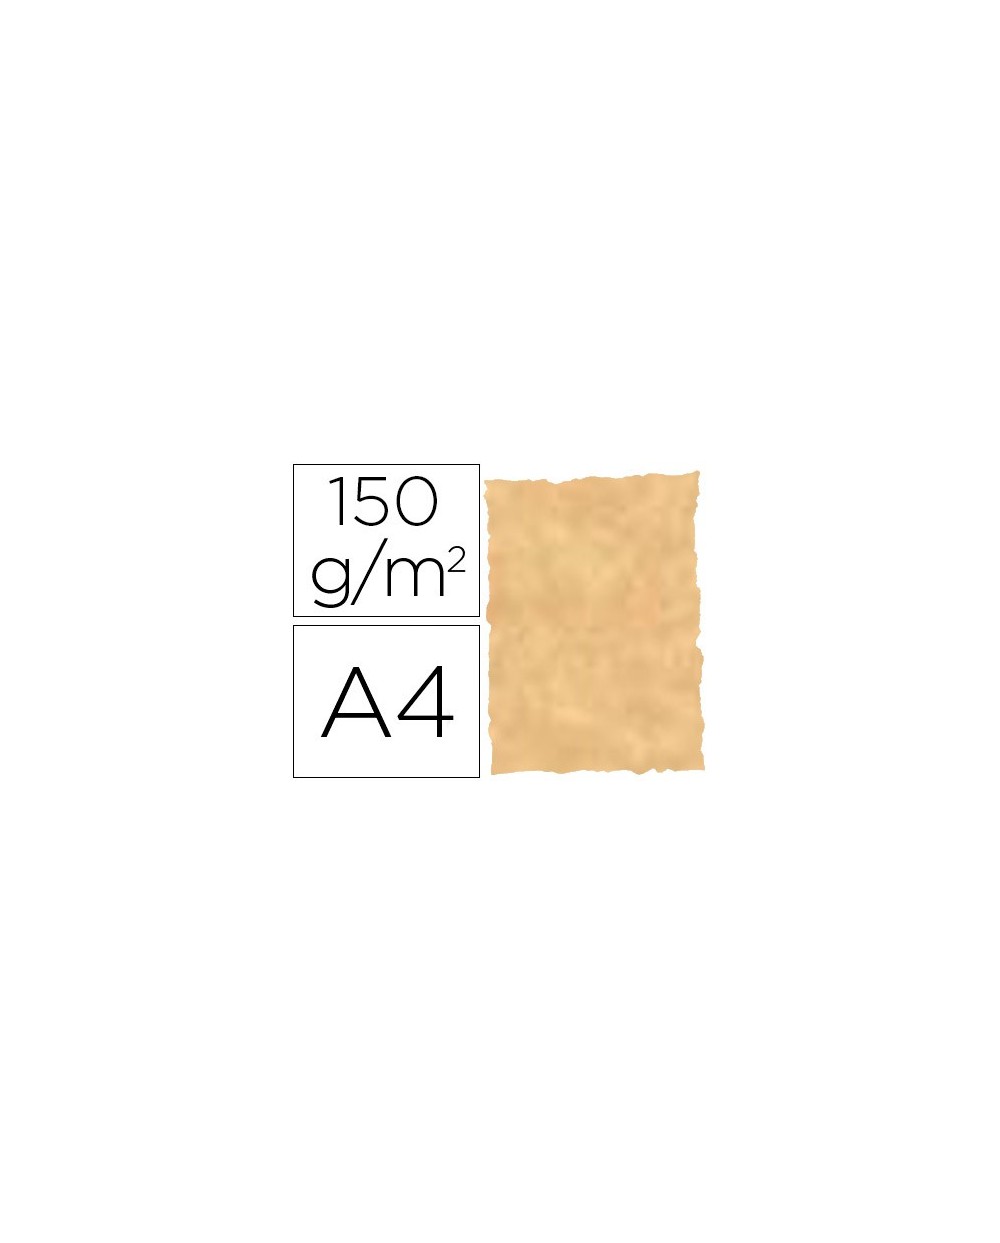 Papel pergamino din a4 troquelado color parchment ocre paquete 25 hojas